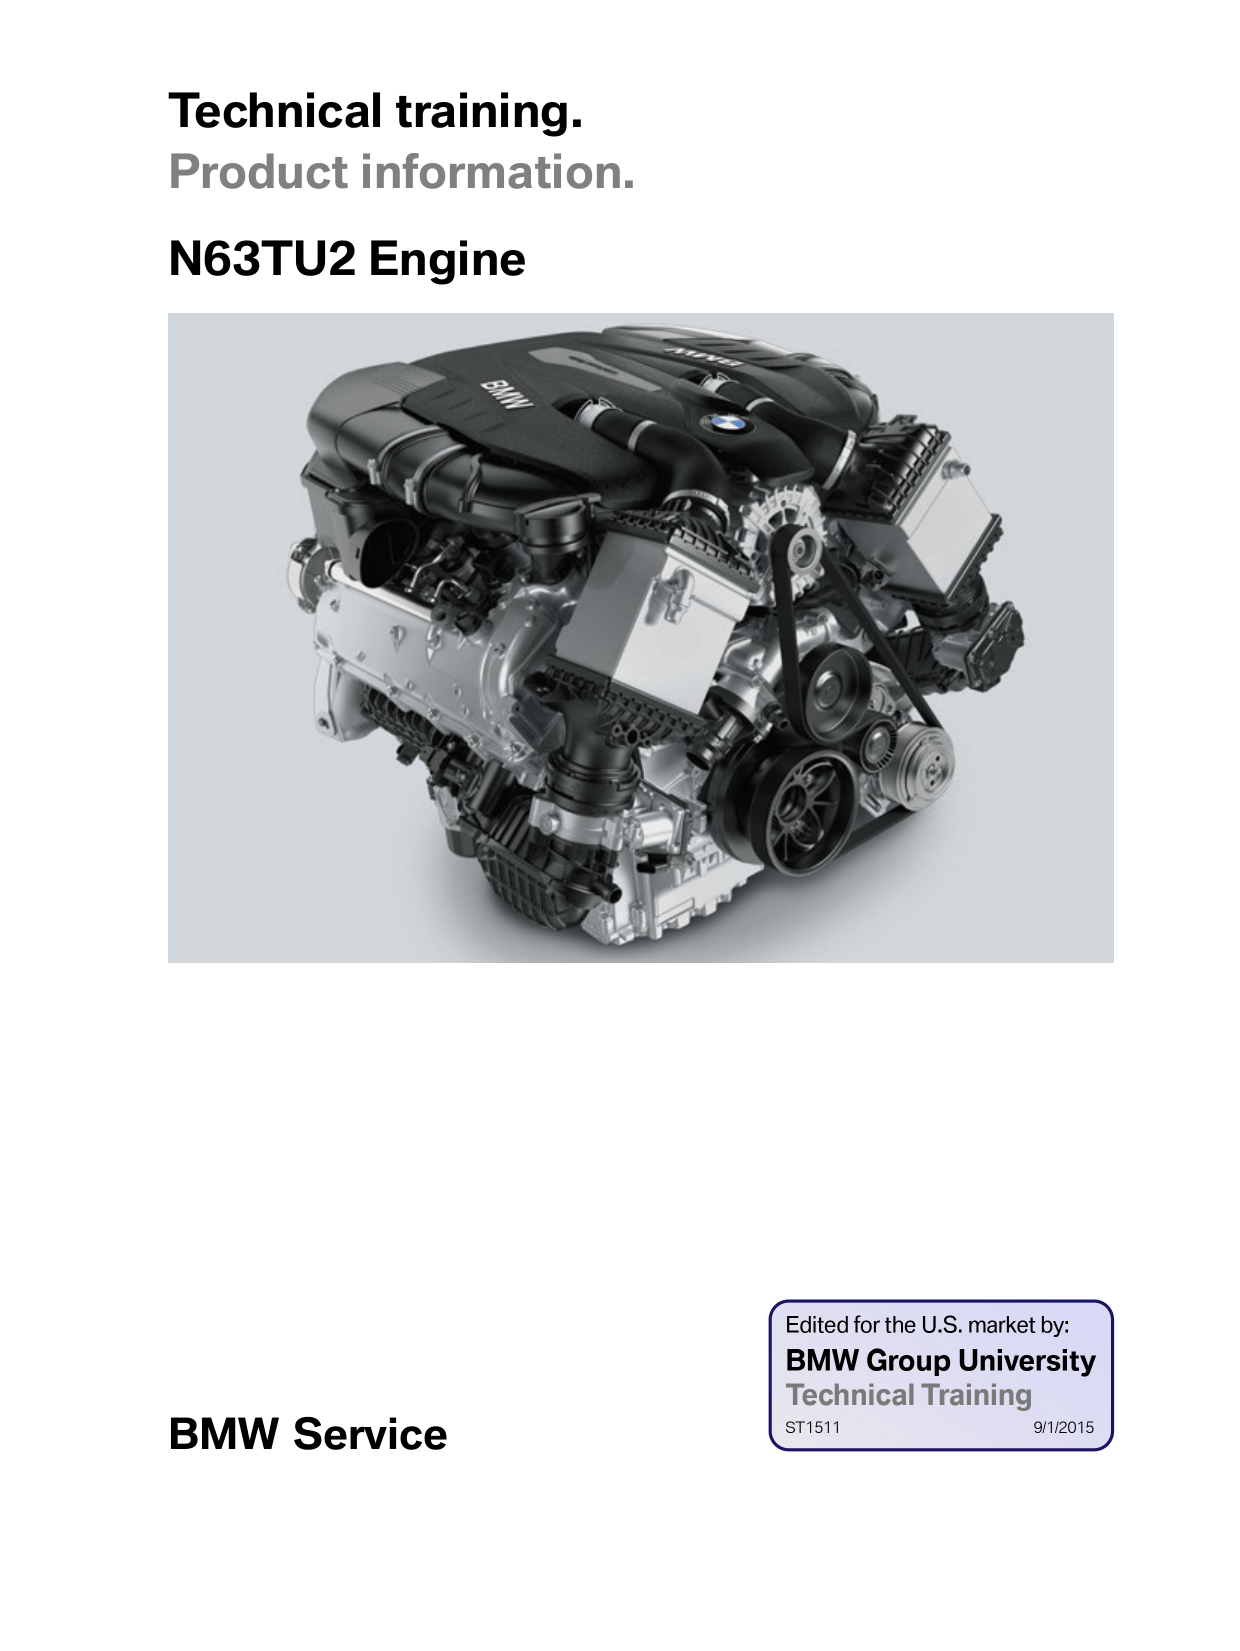 Technical Training Product Information N63tu2 Engine Manualzz